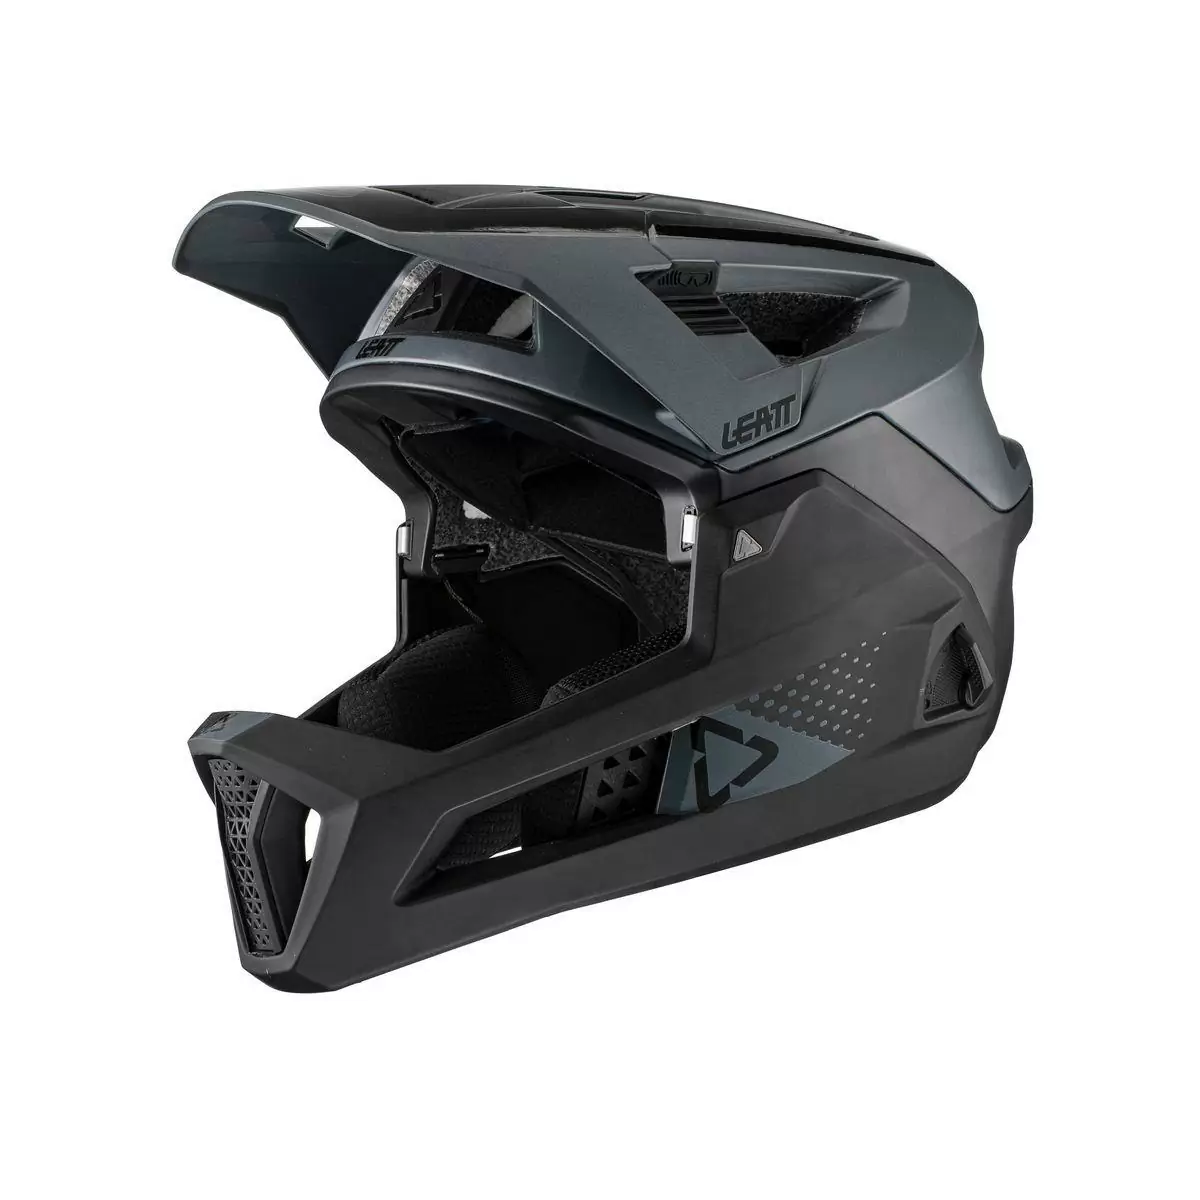 Full-Face Helmet MTB 4.0 Enduro Removable Chinguard Black/Grey Size M (55-59cm) - image